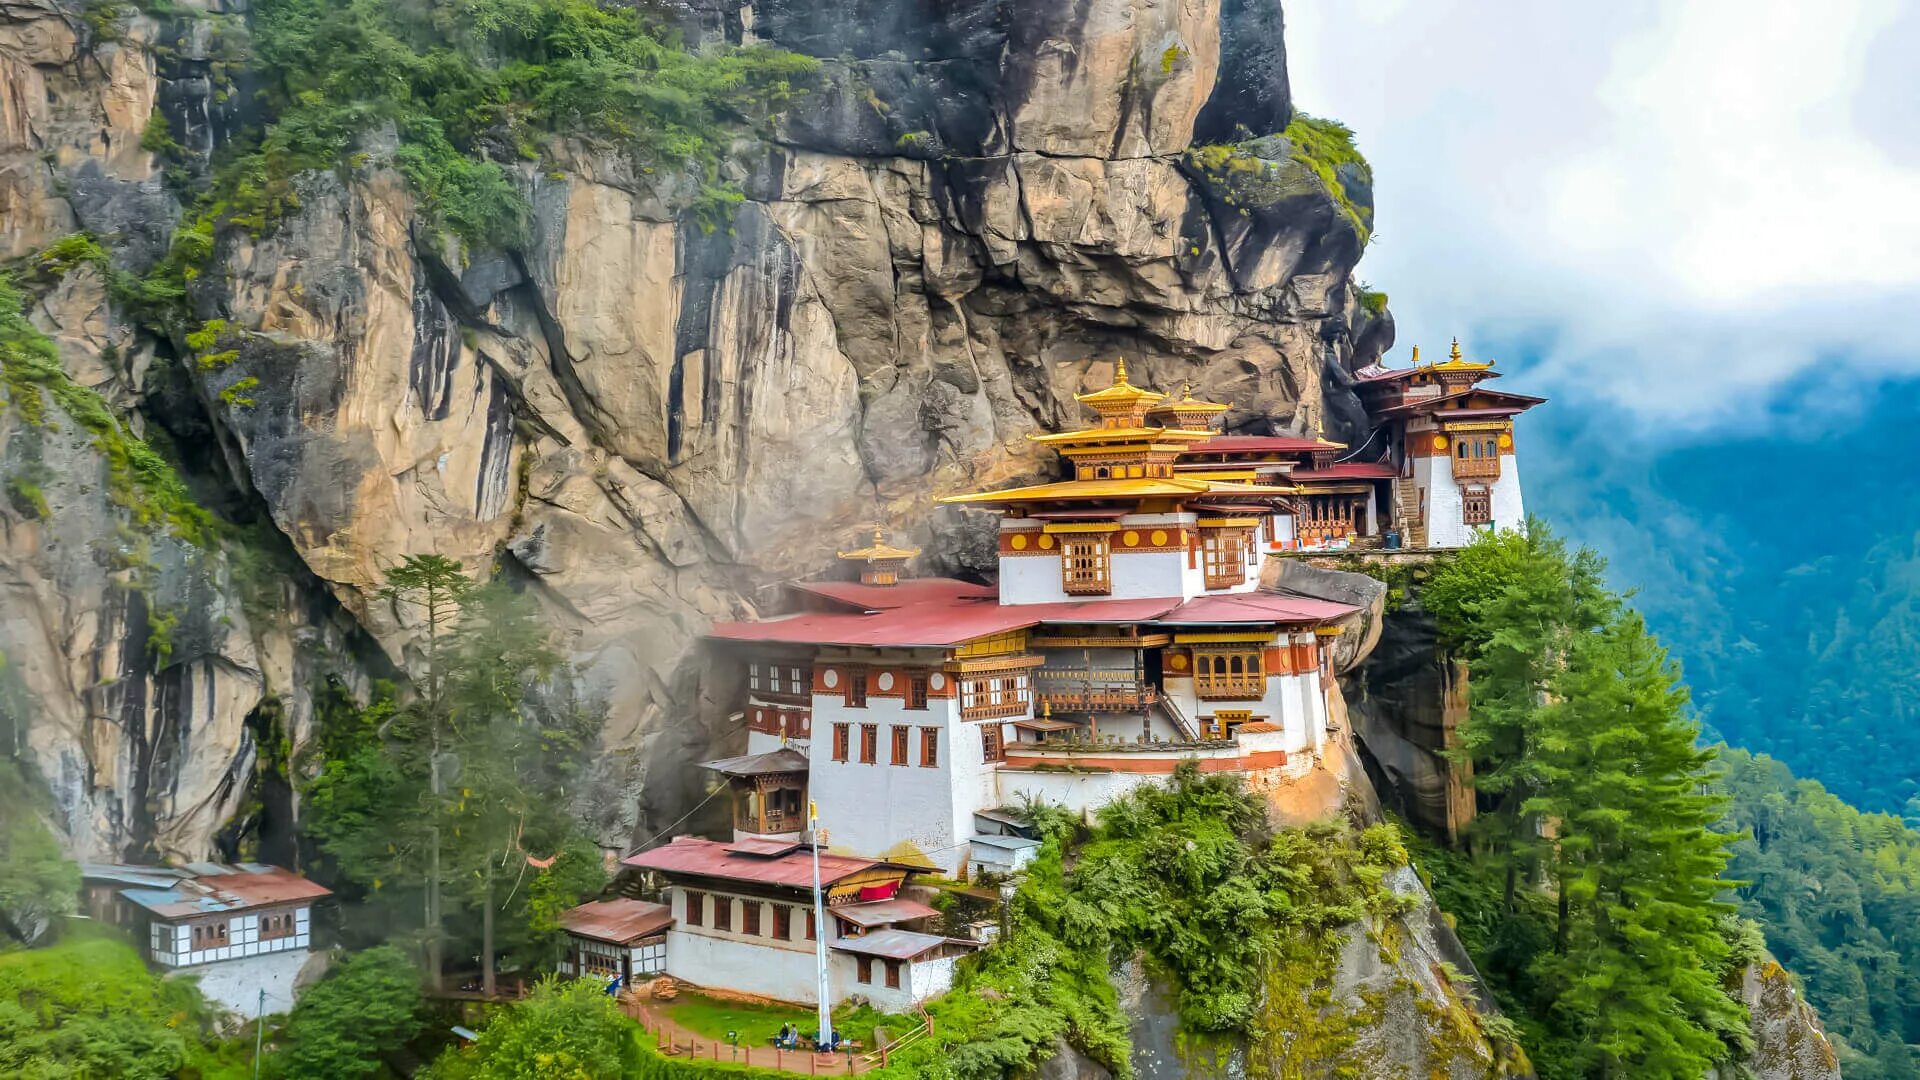 Бутан индия. Монастырь Таксанг, бутан. Монастырь Такцанг-лакханг. Храм “Такцанг паро”, бутан. Монастырь Такцанг-лакханг внутри.